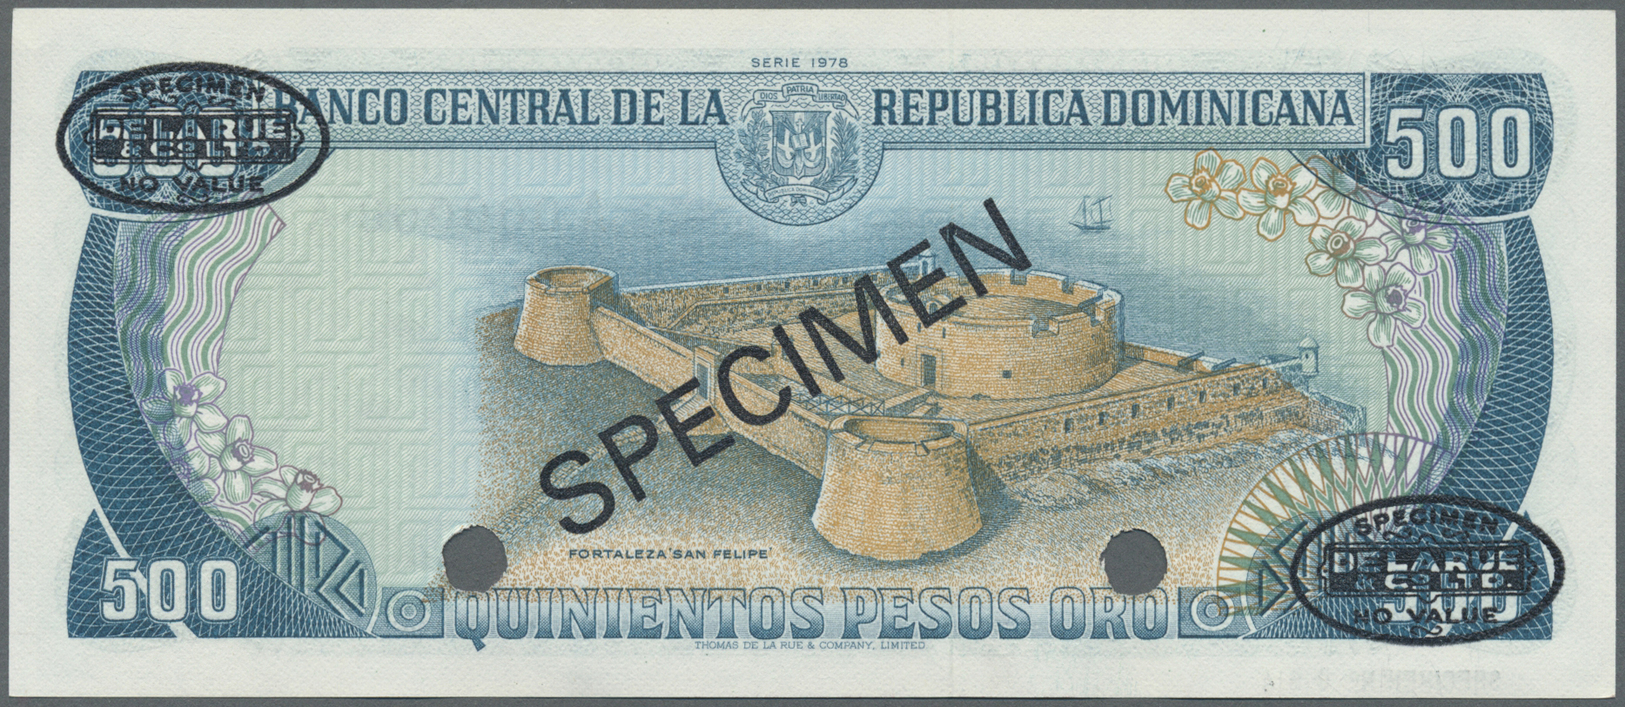 00662 Dominican Republic / Dominikanische Republik: 500 Pesos 1978 Specimen P. 123as In Condition: UNC. - Dominicana